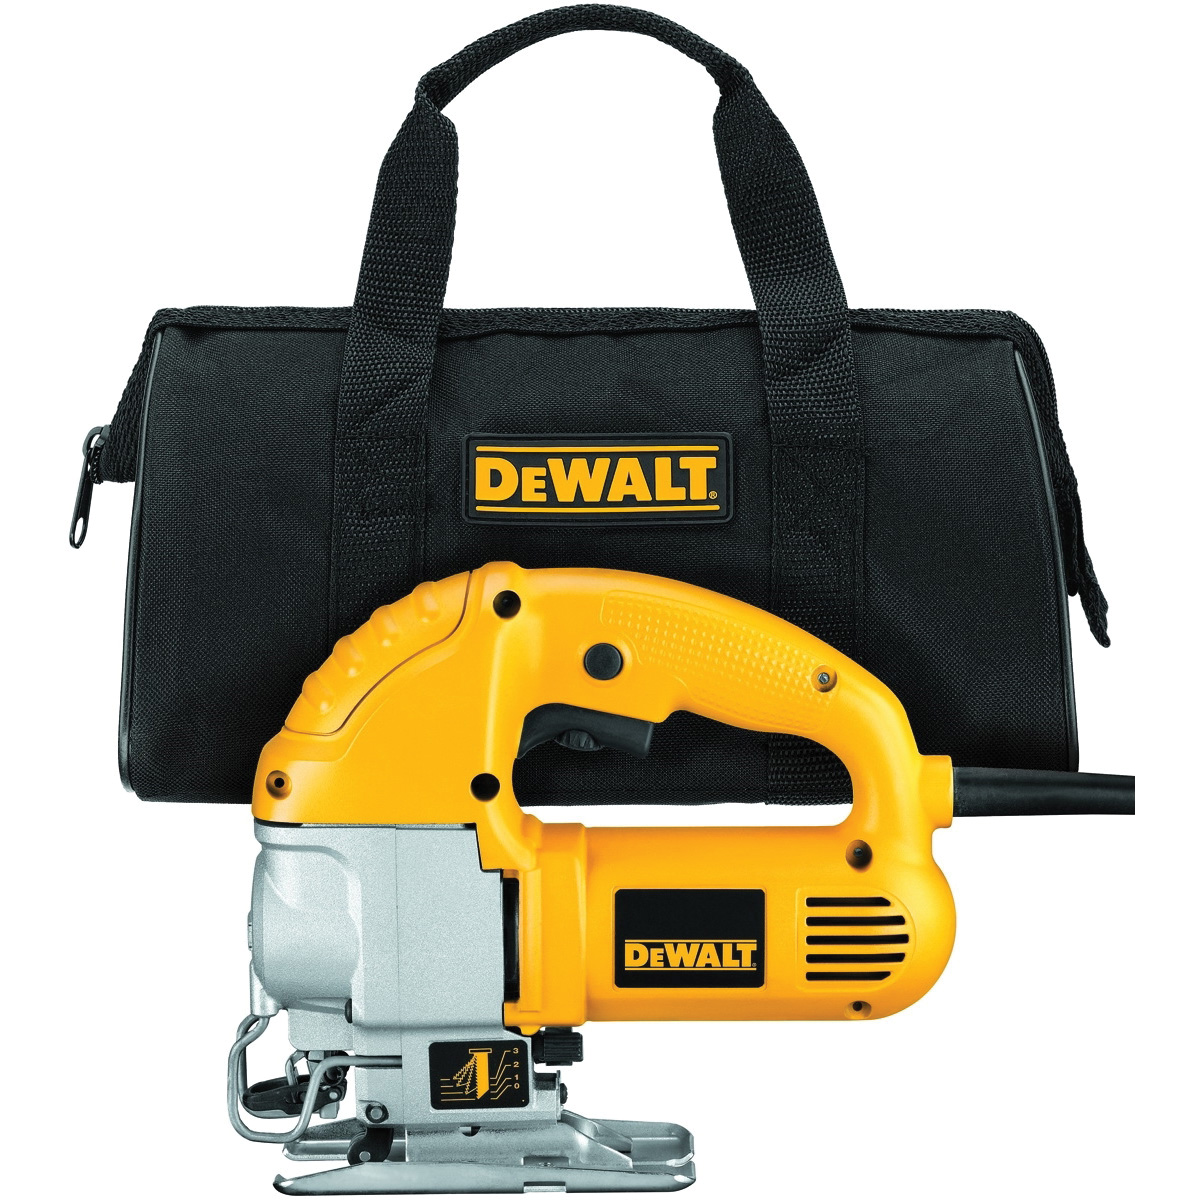 DeWALT DW317K Jig Saw Kit, 5.5 A, 1 in L Stroke, 0 to 3000 spm, Includes: Contractor Bag, DW317 Jig Saw - 5